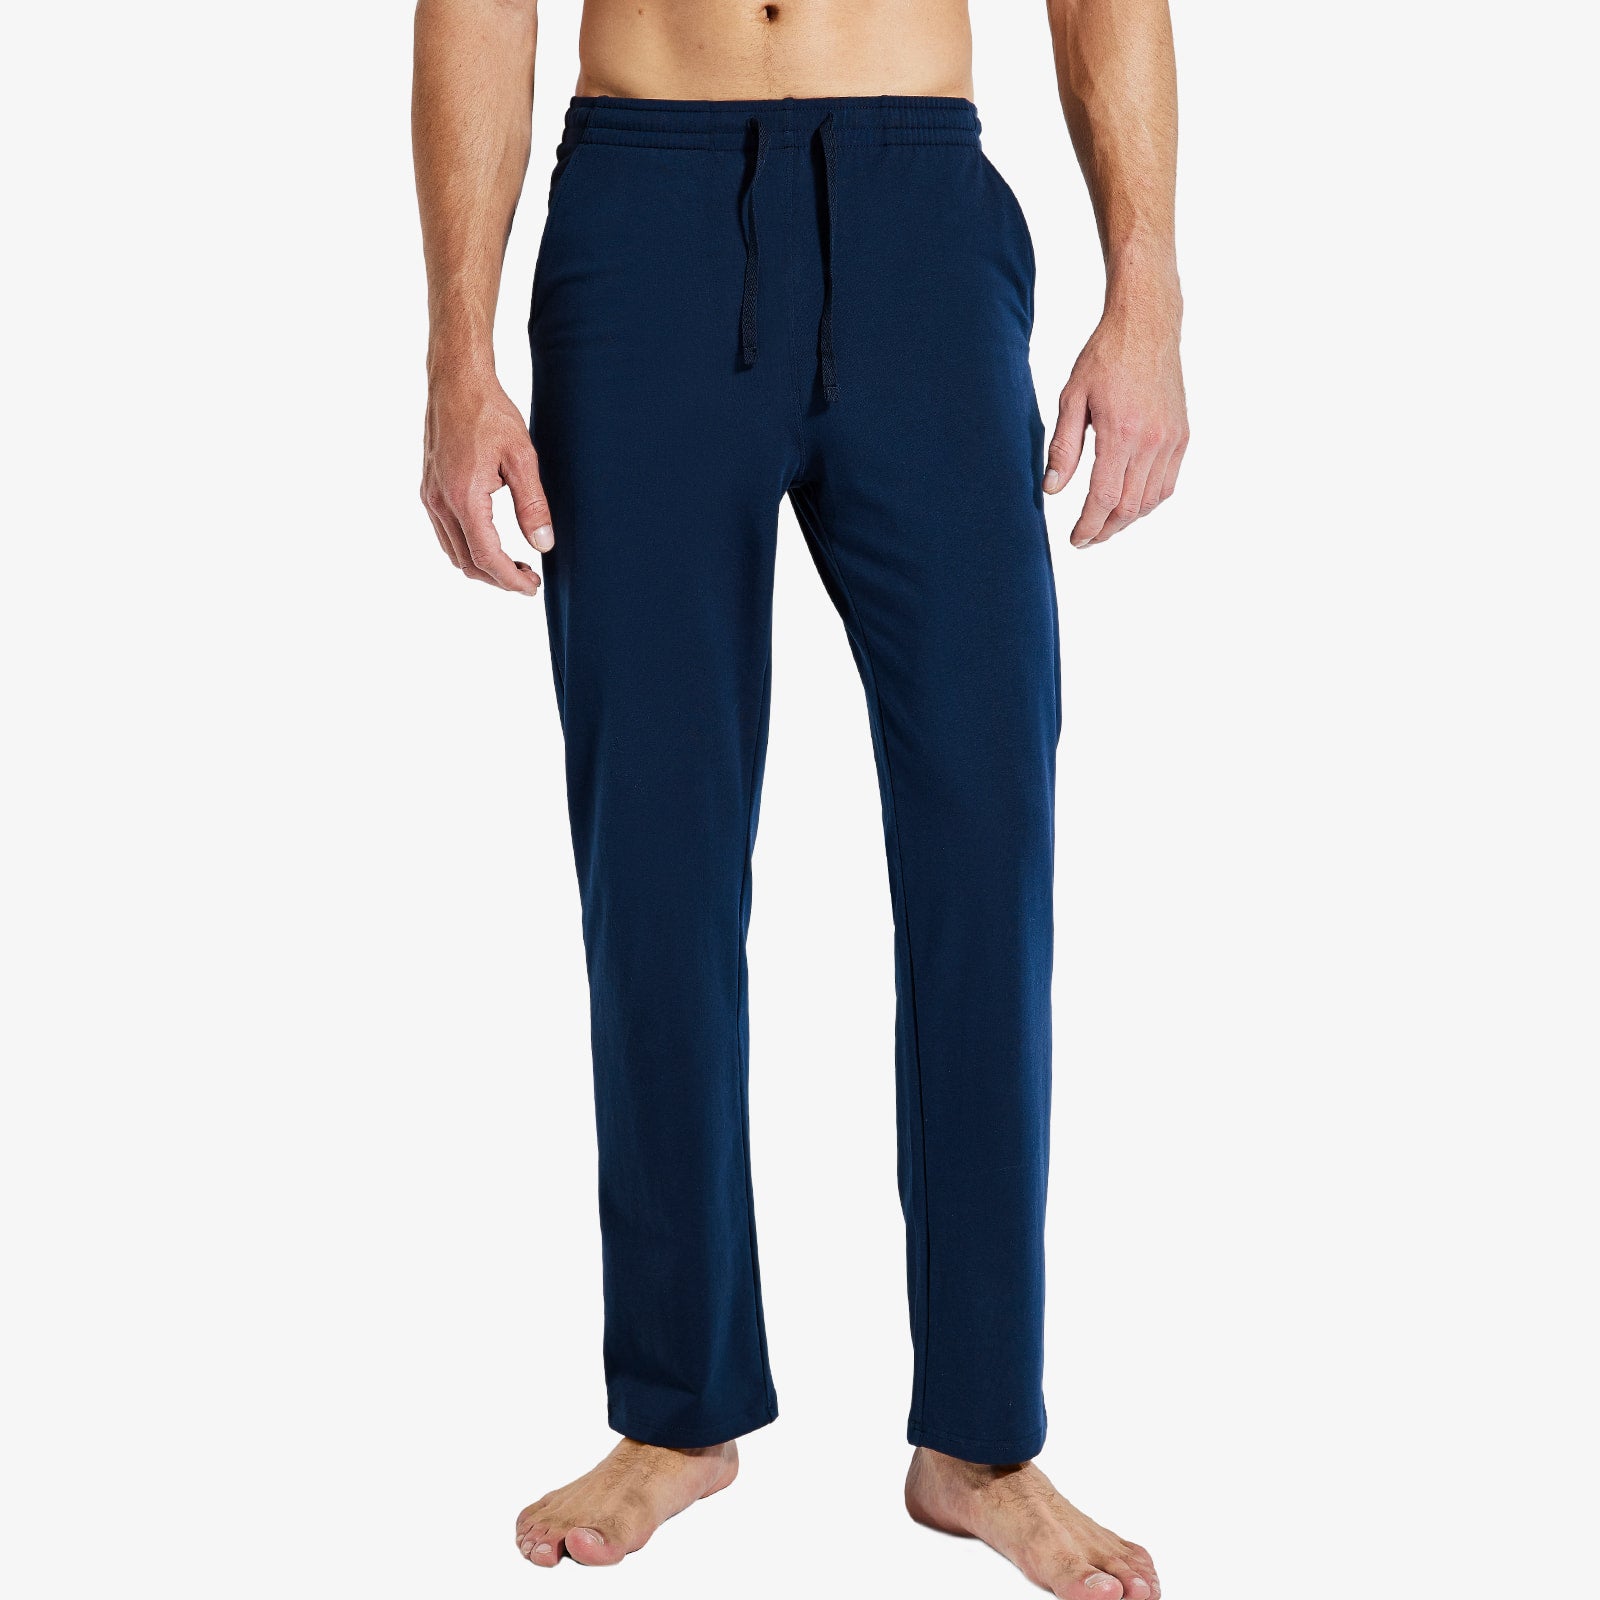 Men's Cotton Sweatpants with Pockets Lightweight Sports Knit Pants Men Train Pants Navy / S MIER